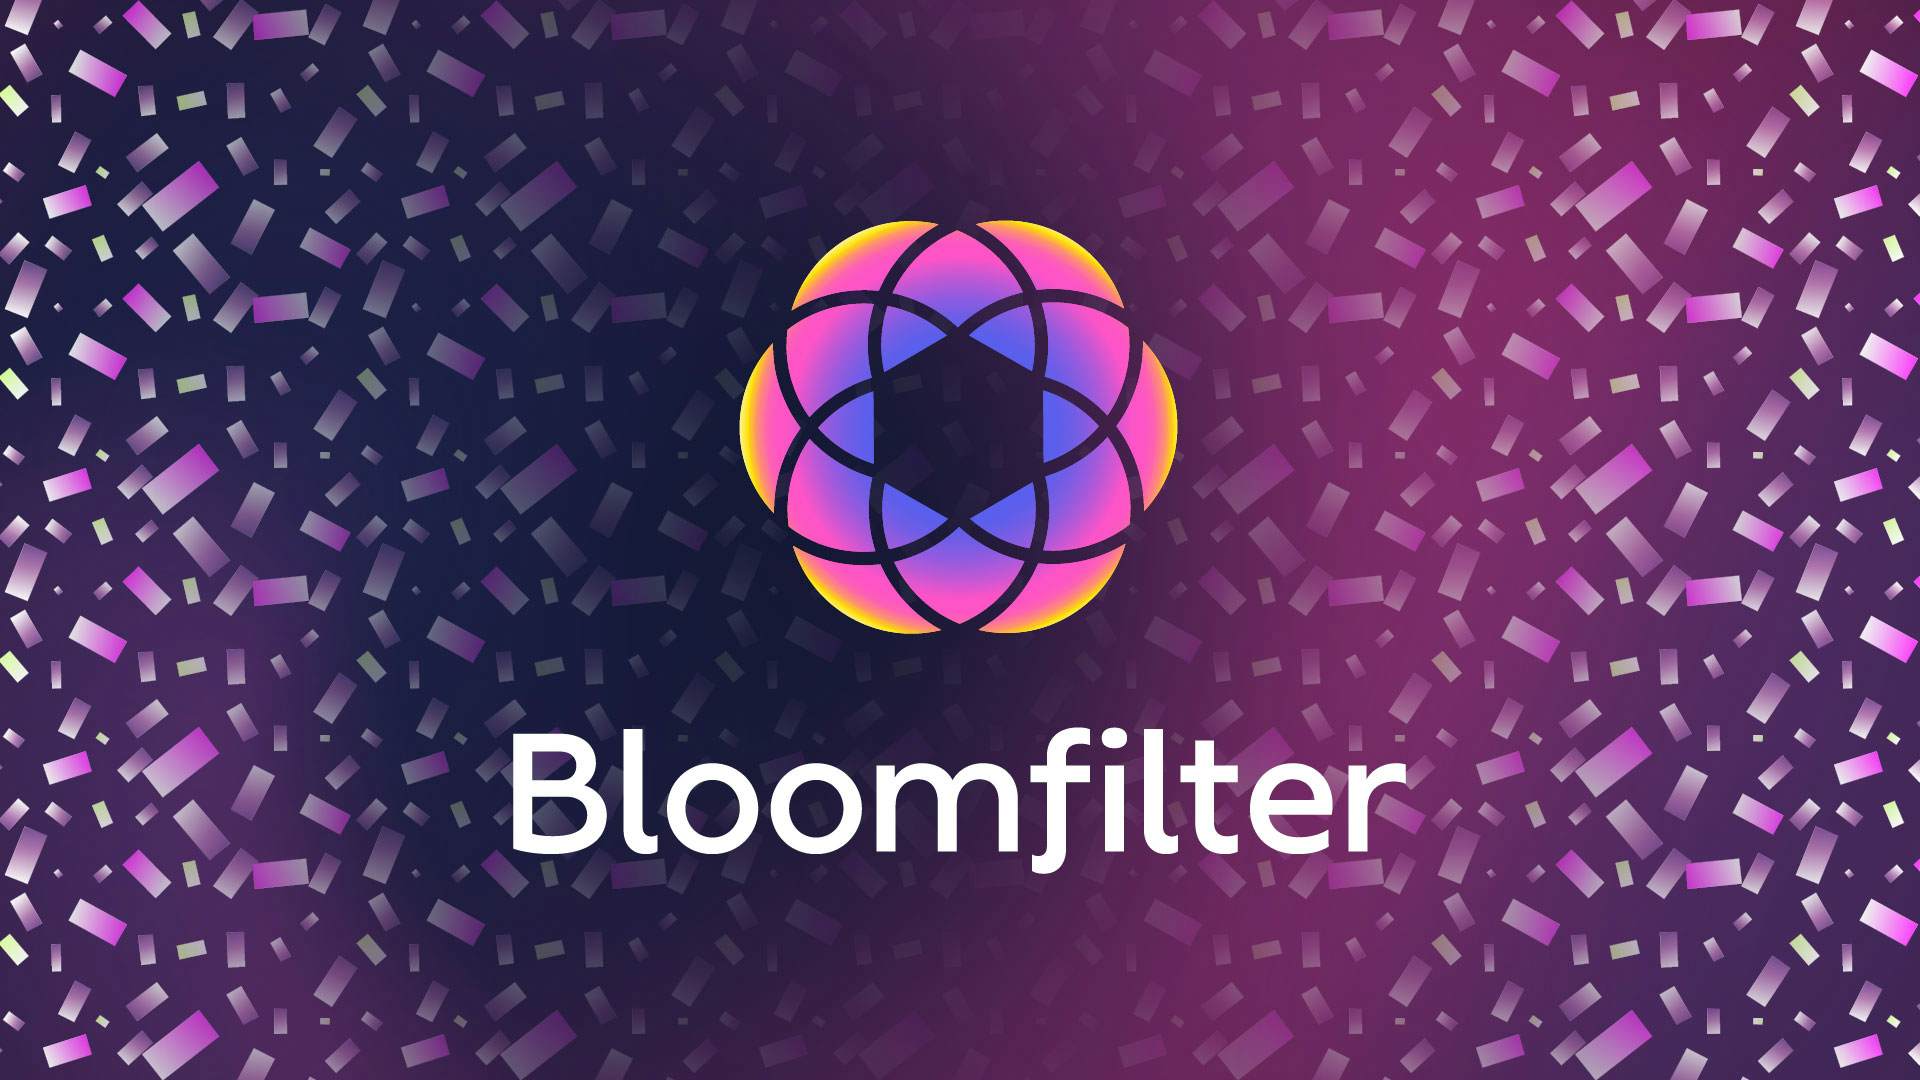 Bloomfilter portco logo